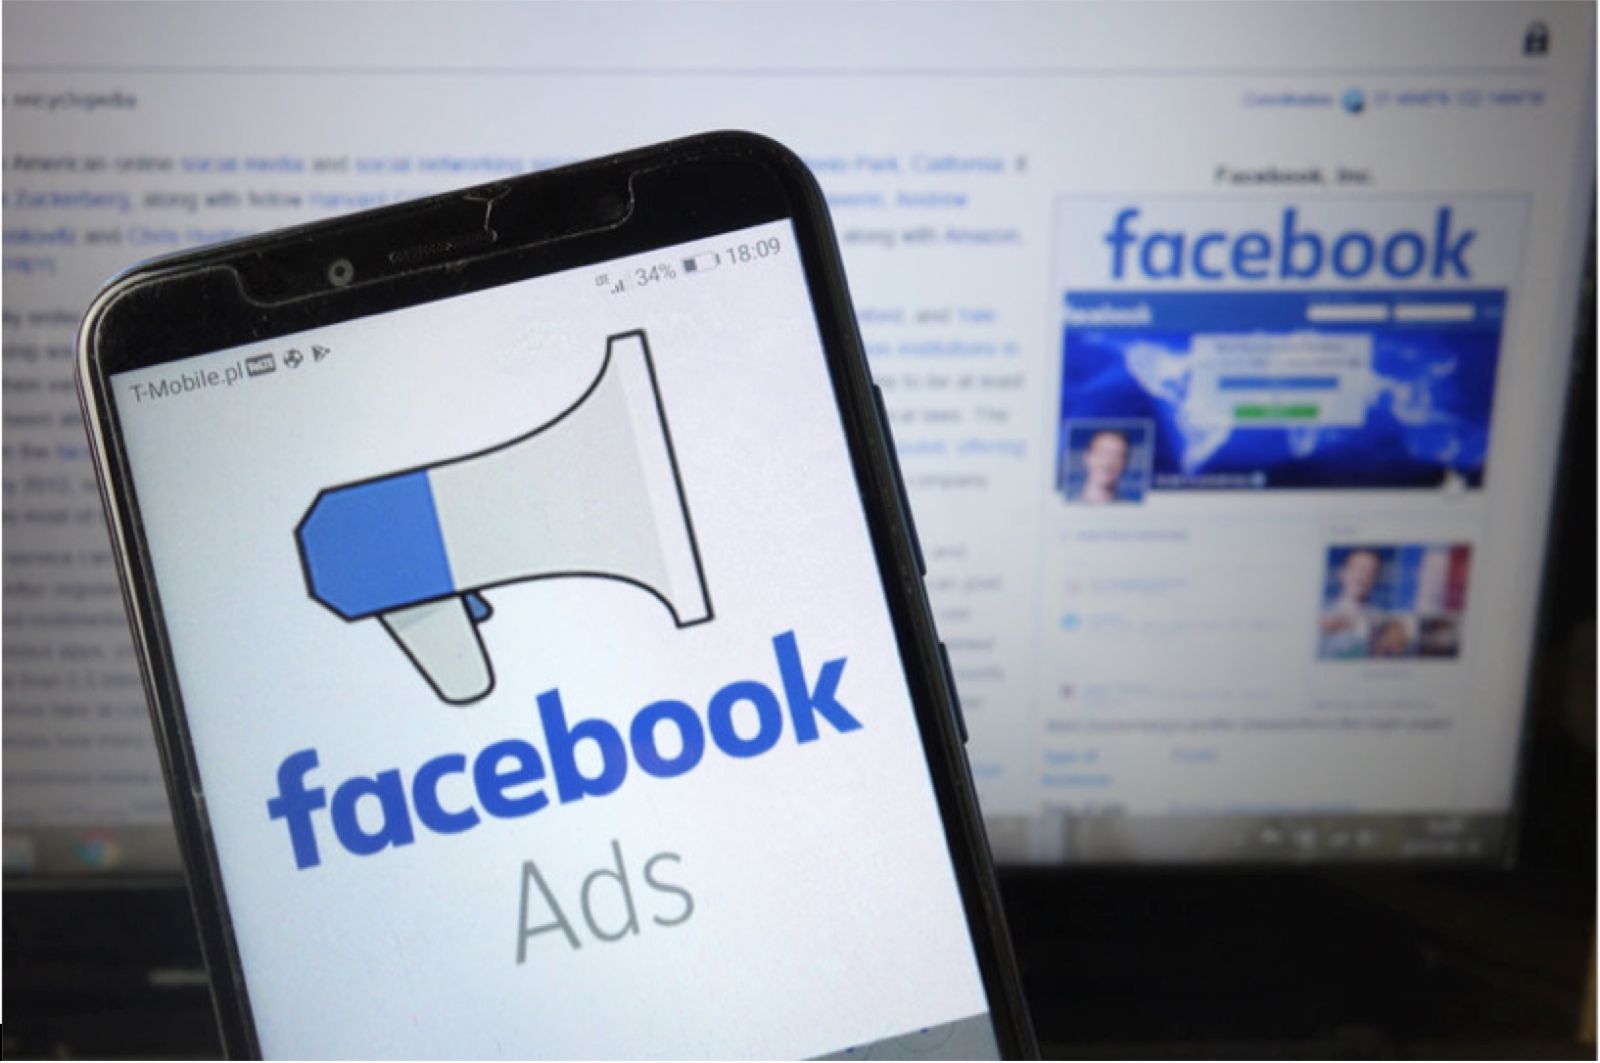 Publicite Facebook Agence Facebook Ads